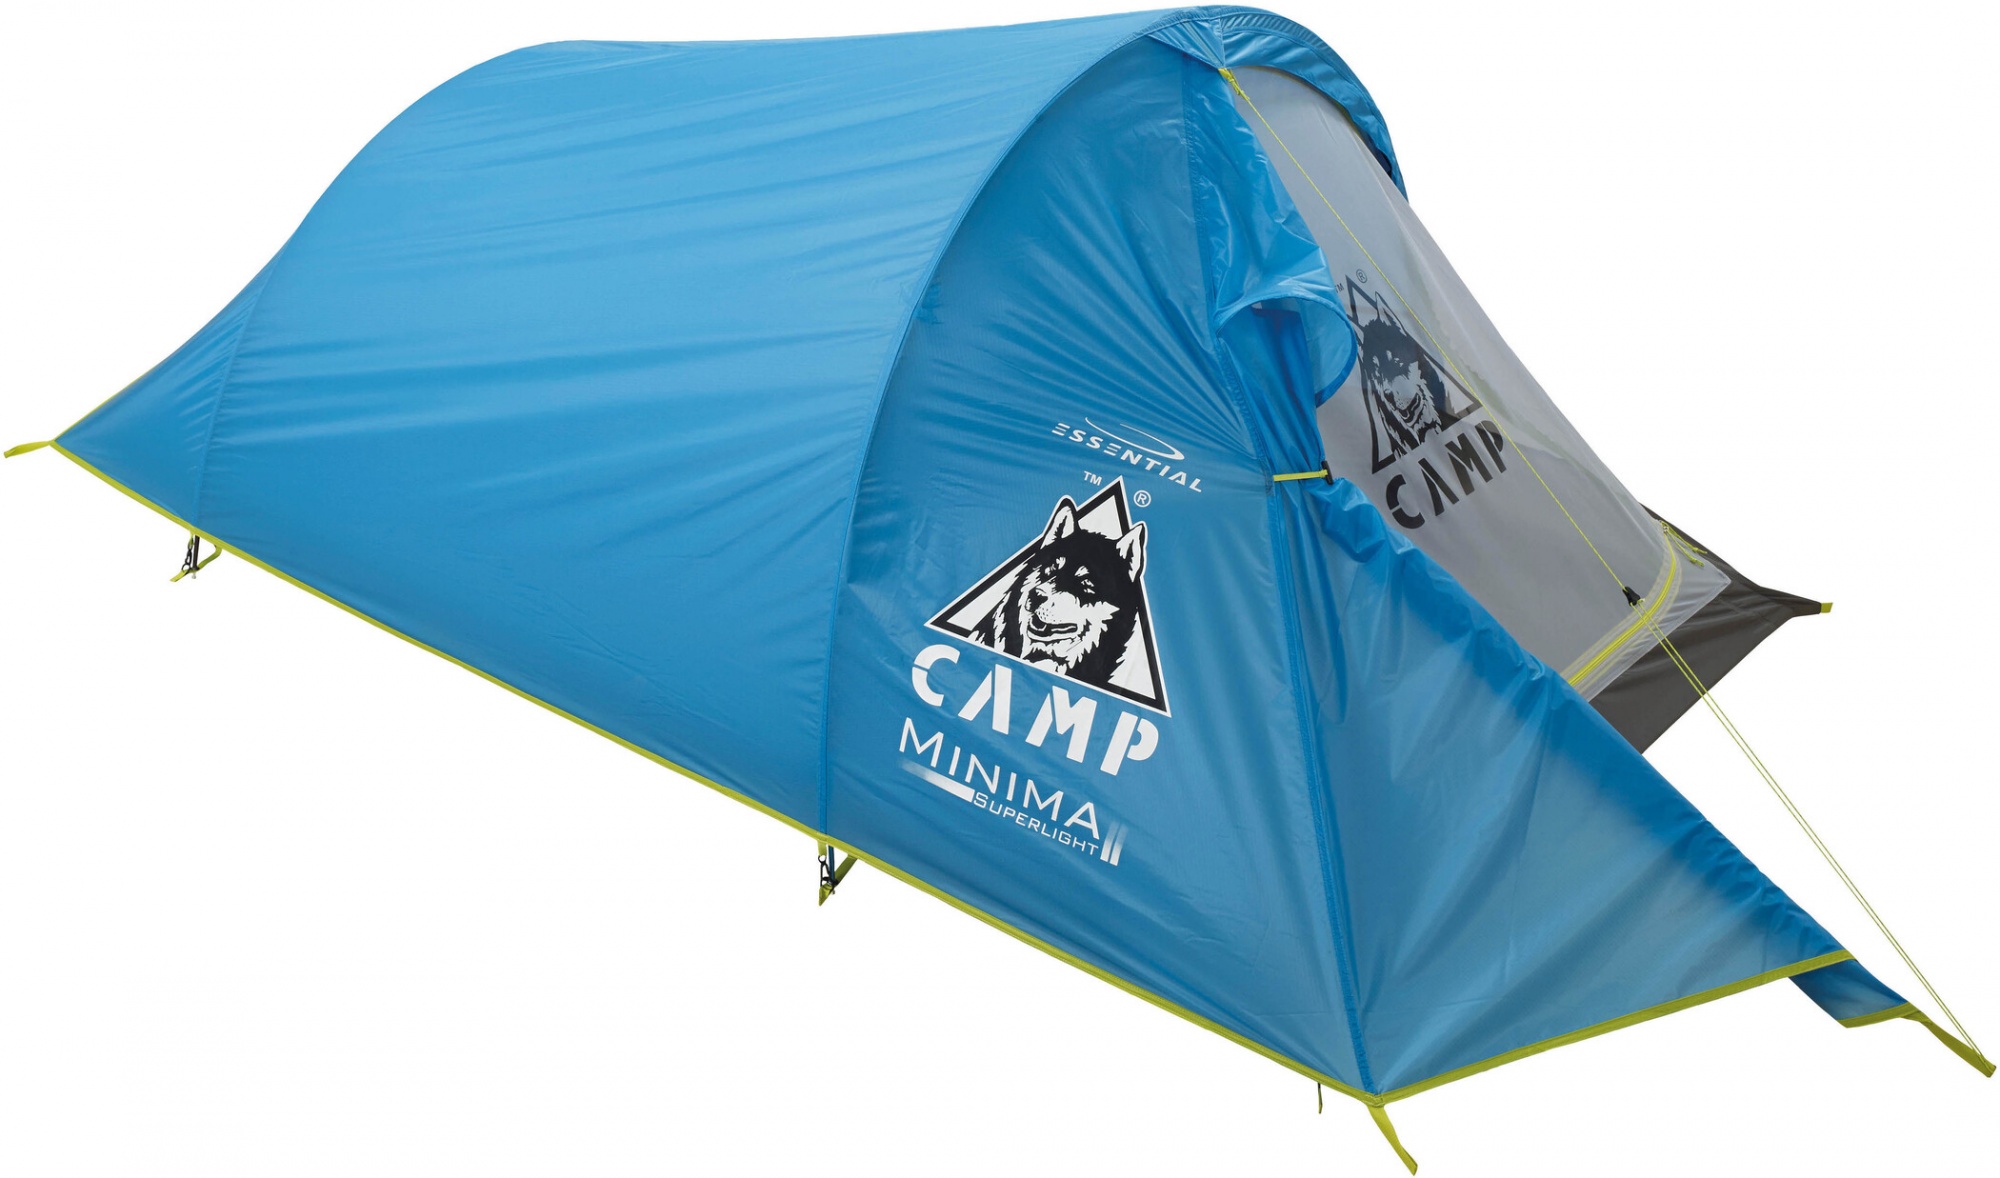 Camping tent 2. Палатка Camp minima 2 SL. Палатка Camp minima 1 SL. Палатка Camp hike Spirit 2 Alu. Палатка Camp Nagoa v.